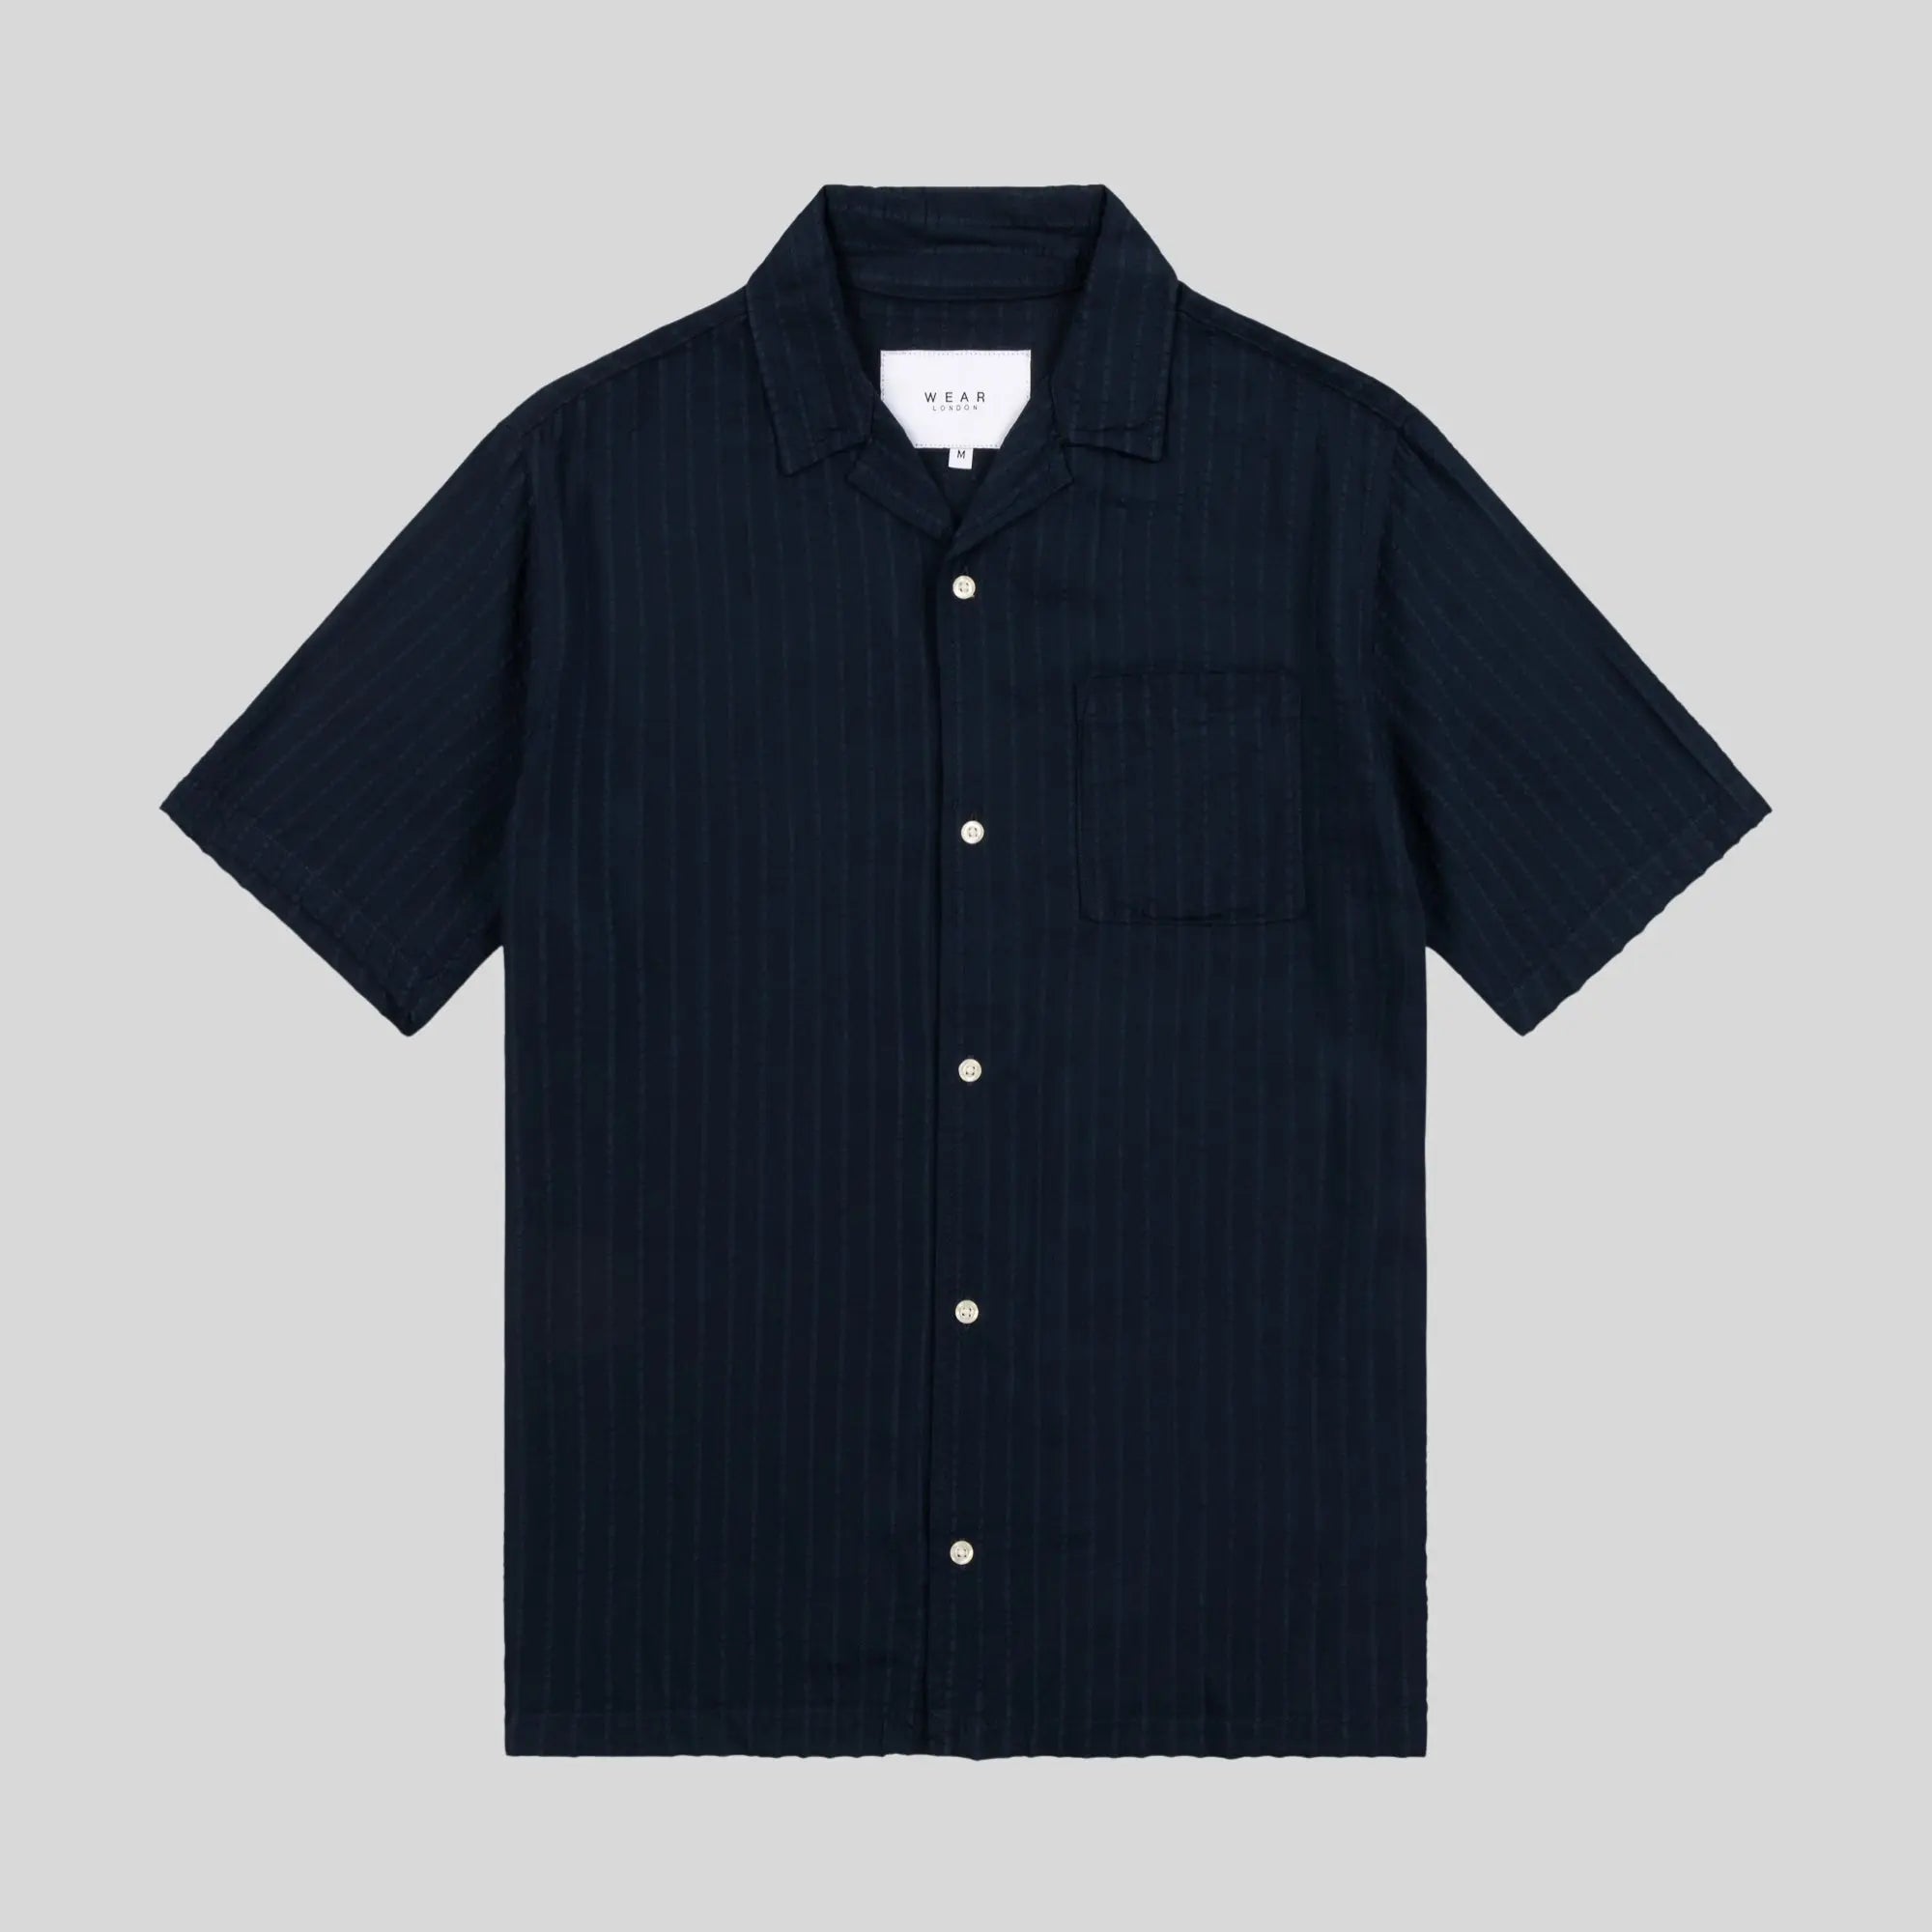 Parmer - Short Sleeve Shirt - Dark Navy - Wear London